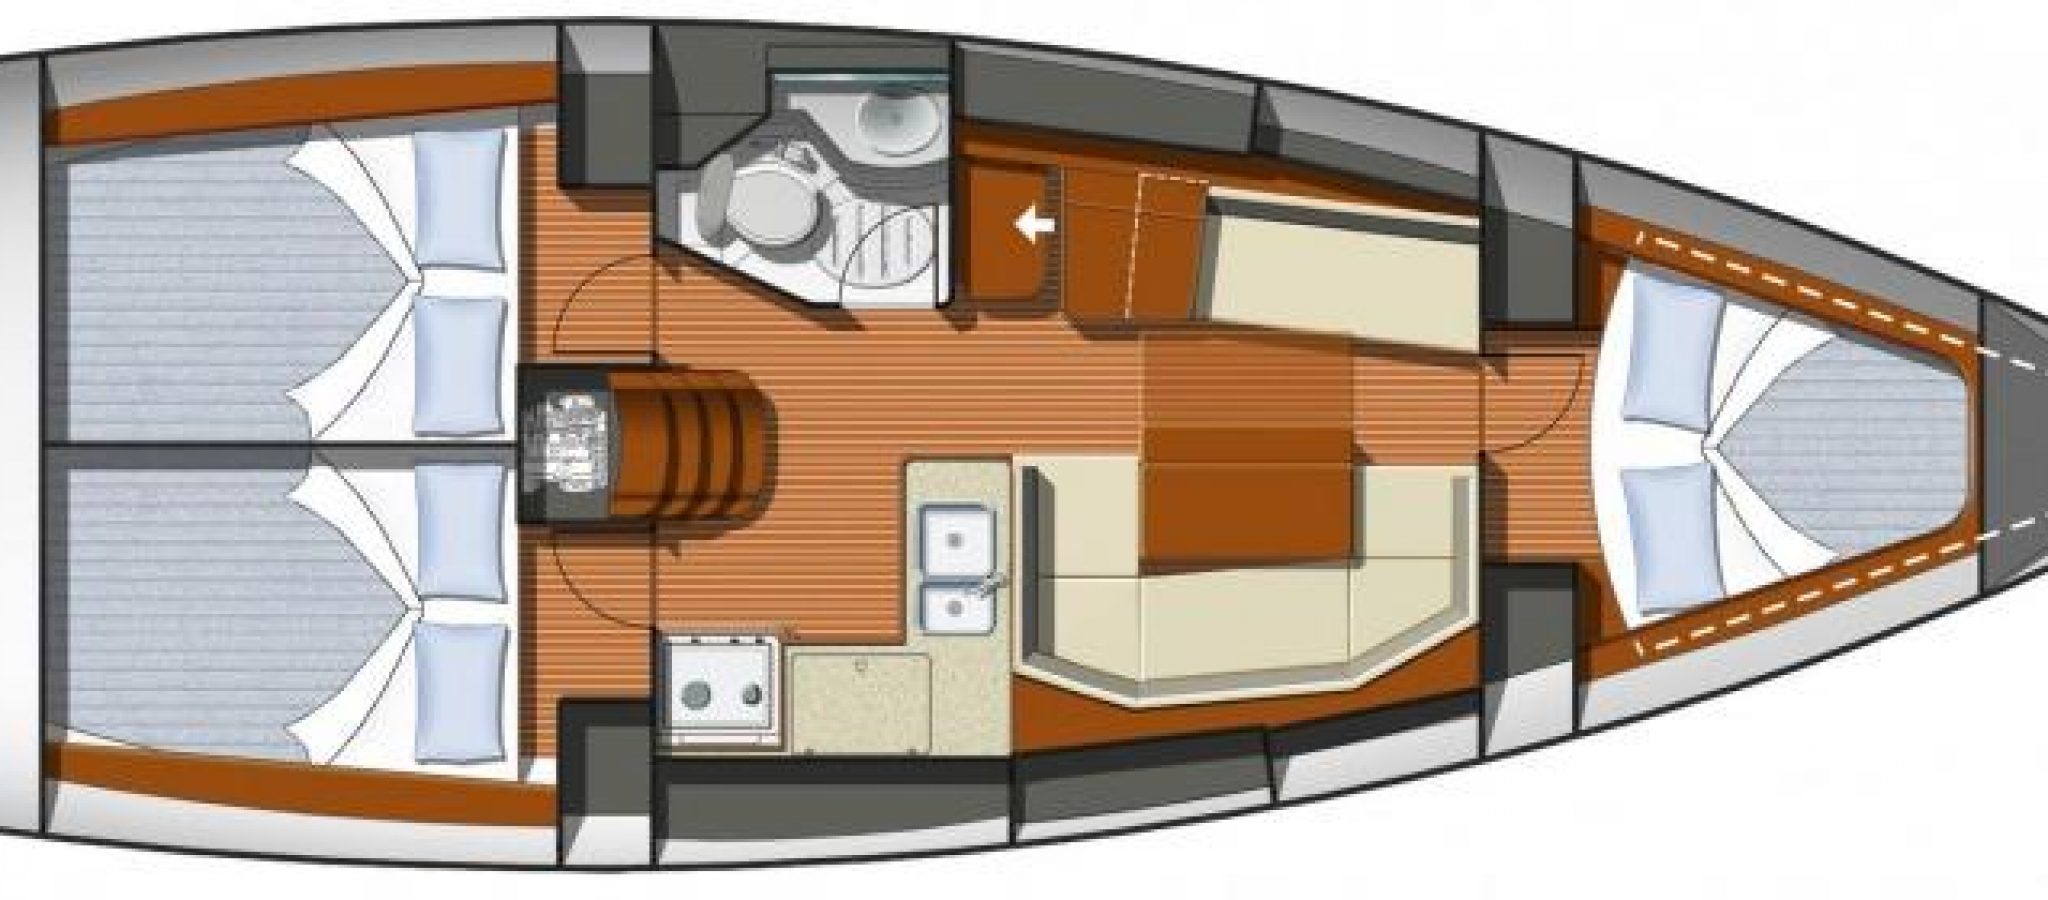 sun Odyssey 36i plan 3 cabines